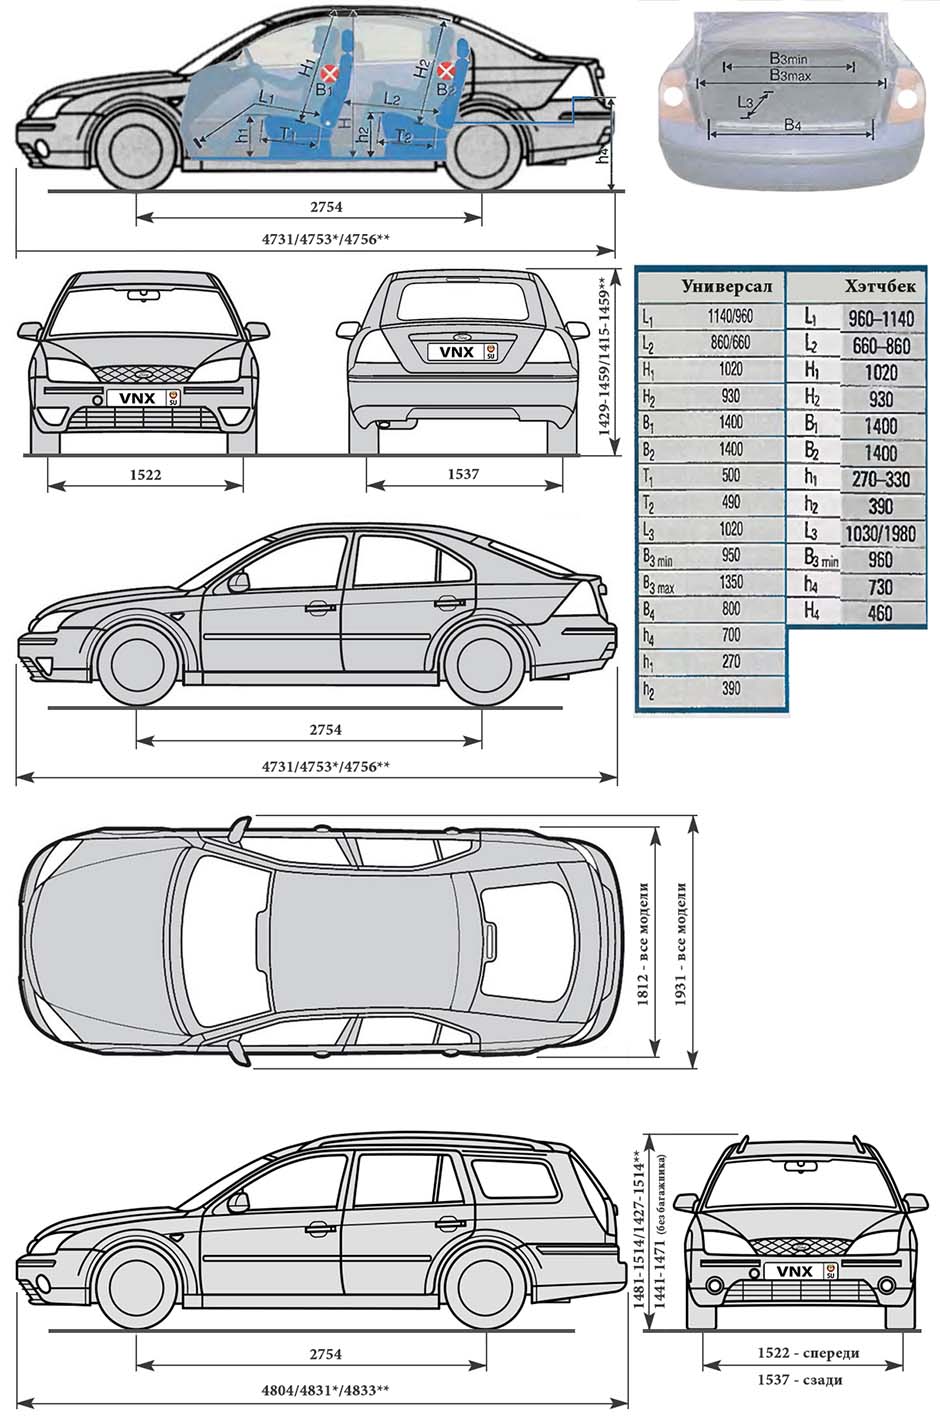 Габаритные размеры Форд Мондео 3 (dimensions Ford Mondeo III)